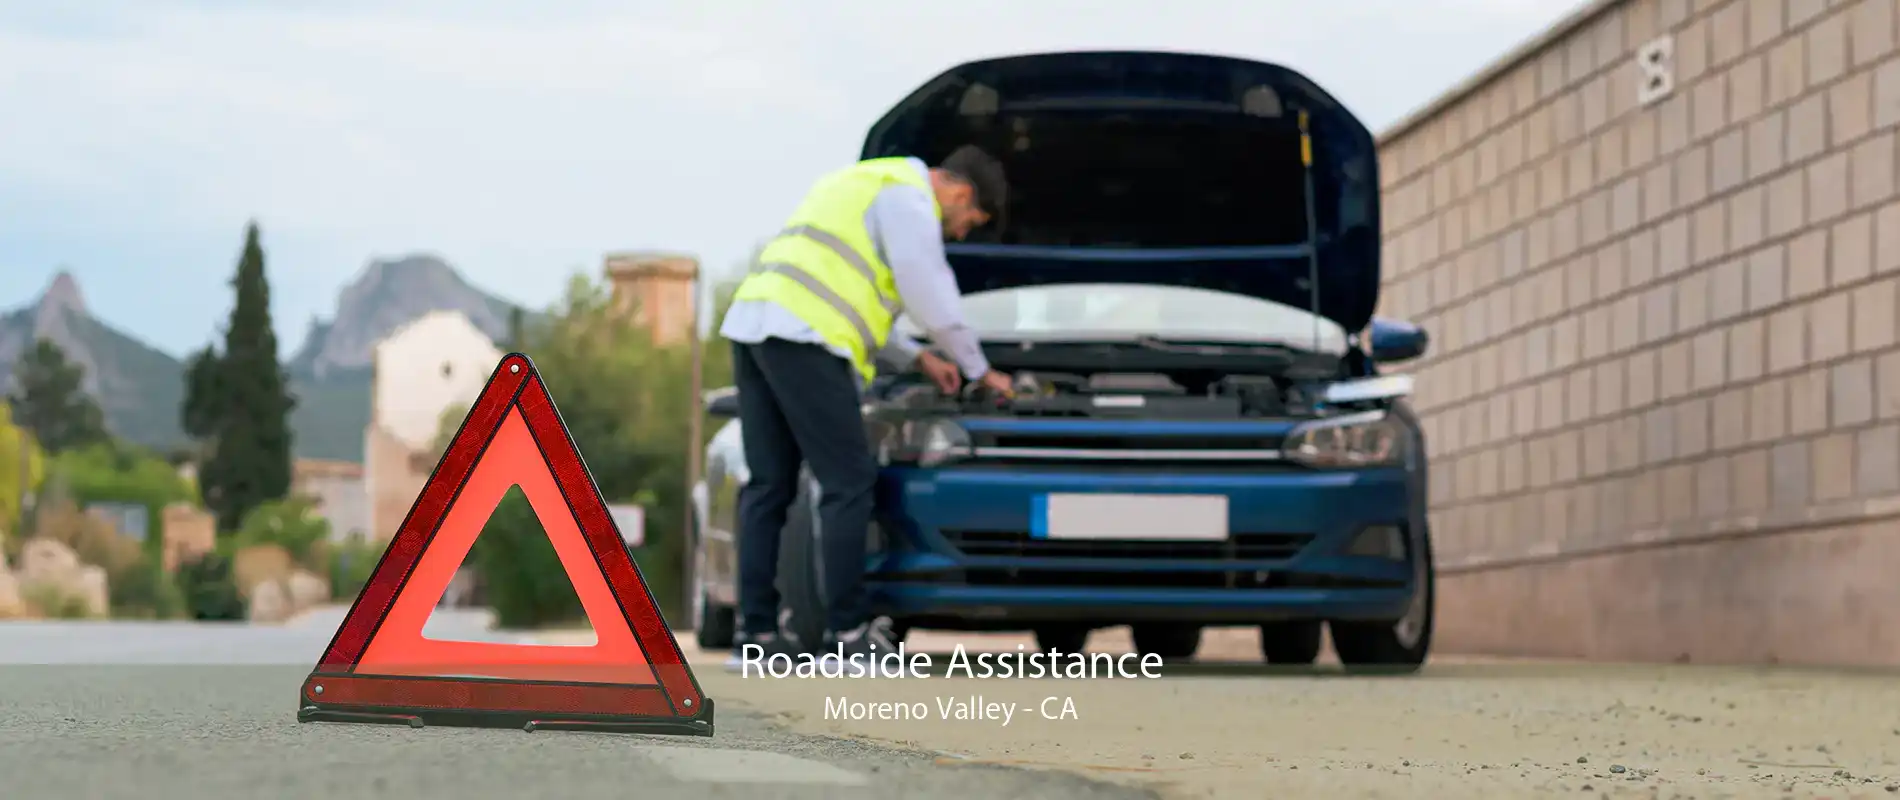 Roadside Assistance Moreno Valley - CA